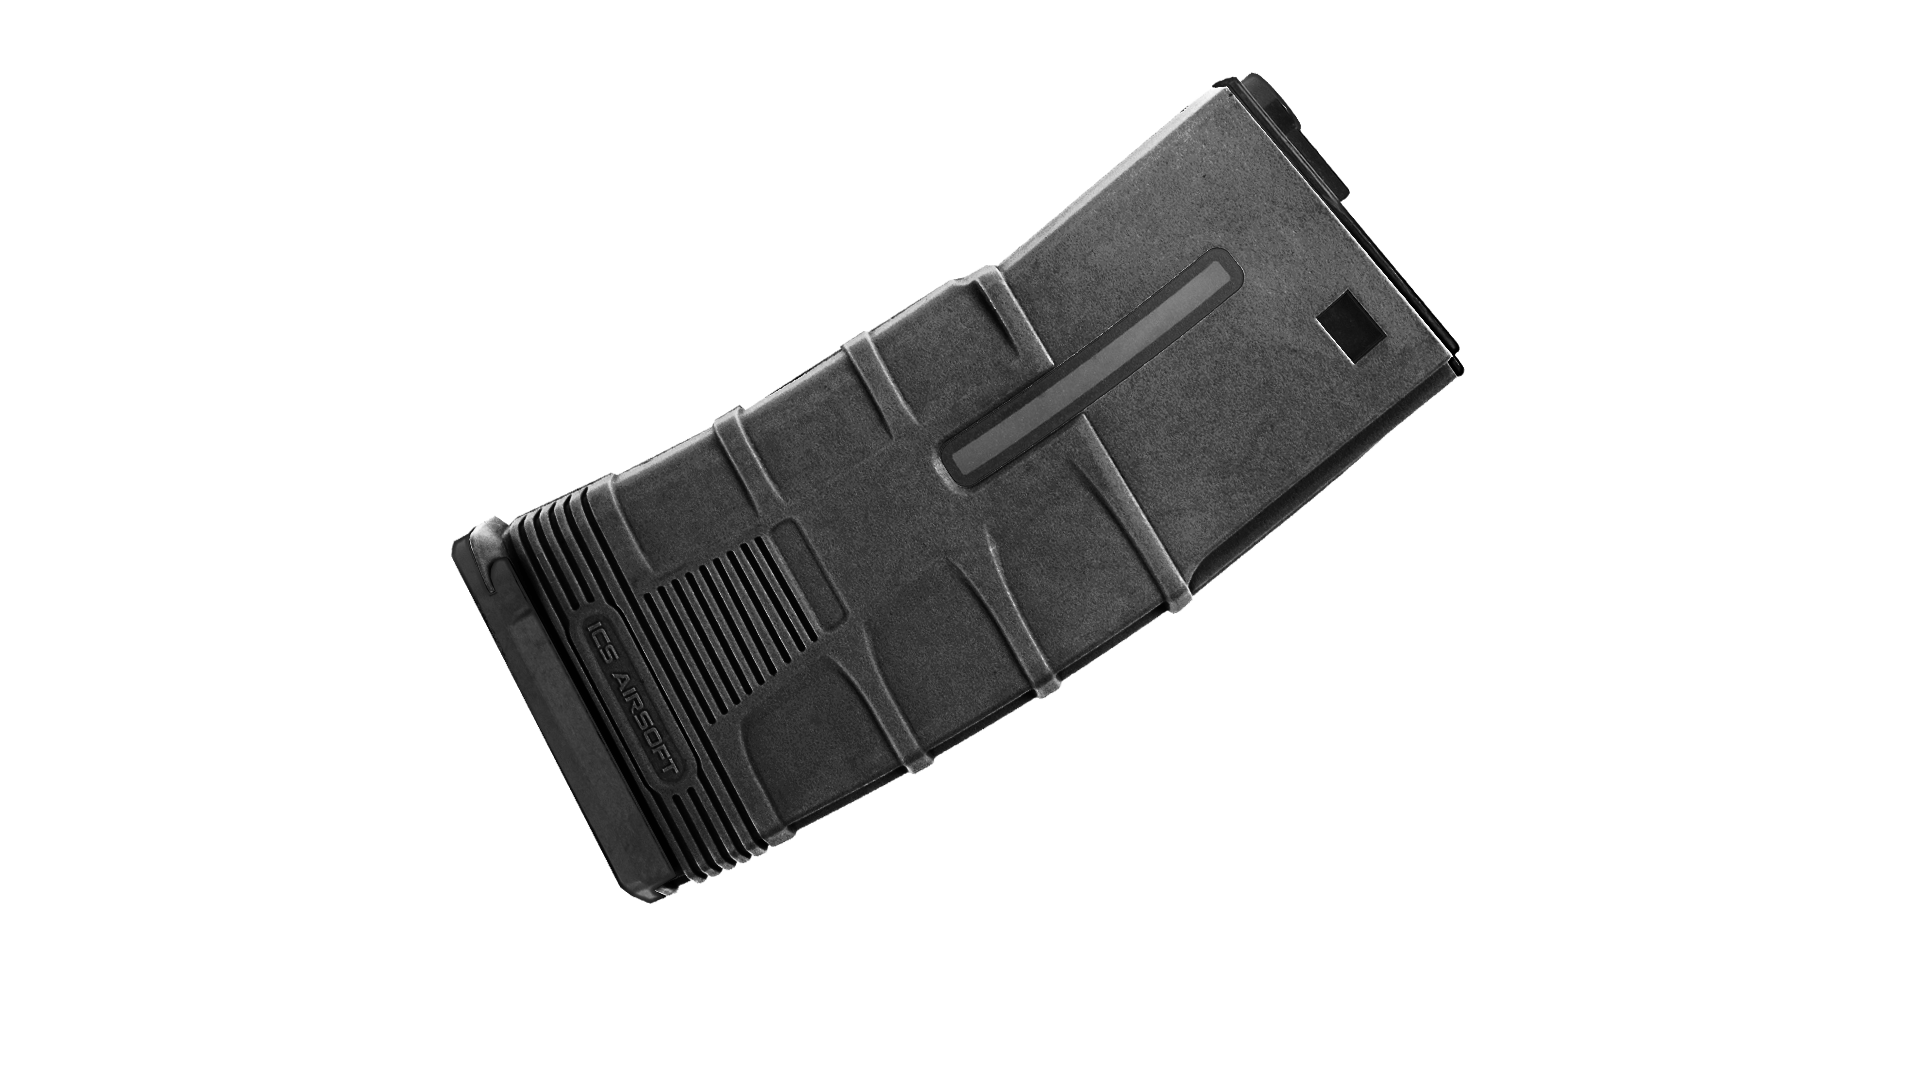 【MA-186】T戰術高容量彈匣 (300發; 1入/組) - 黑色